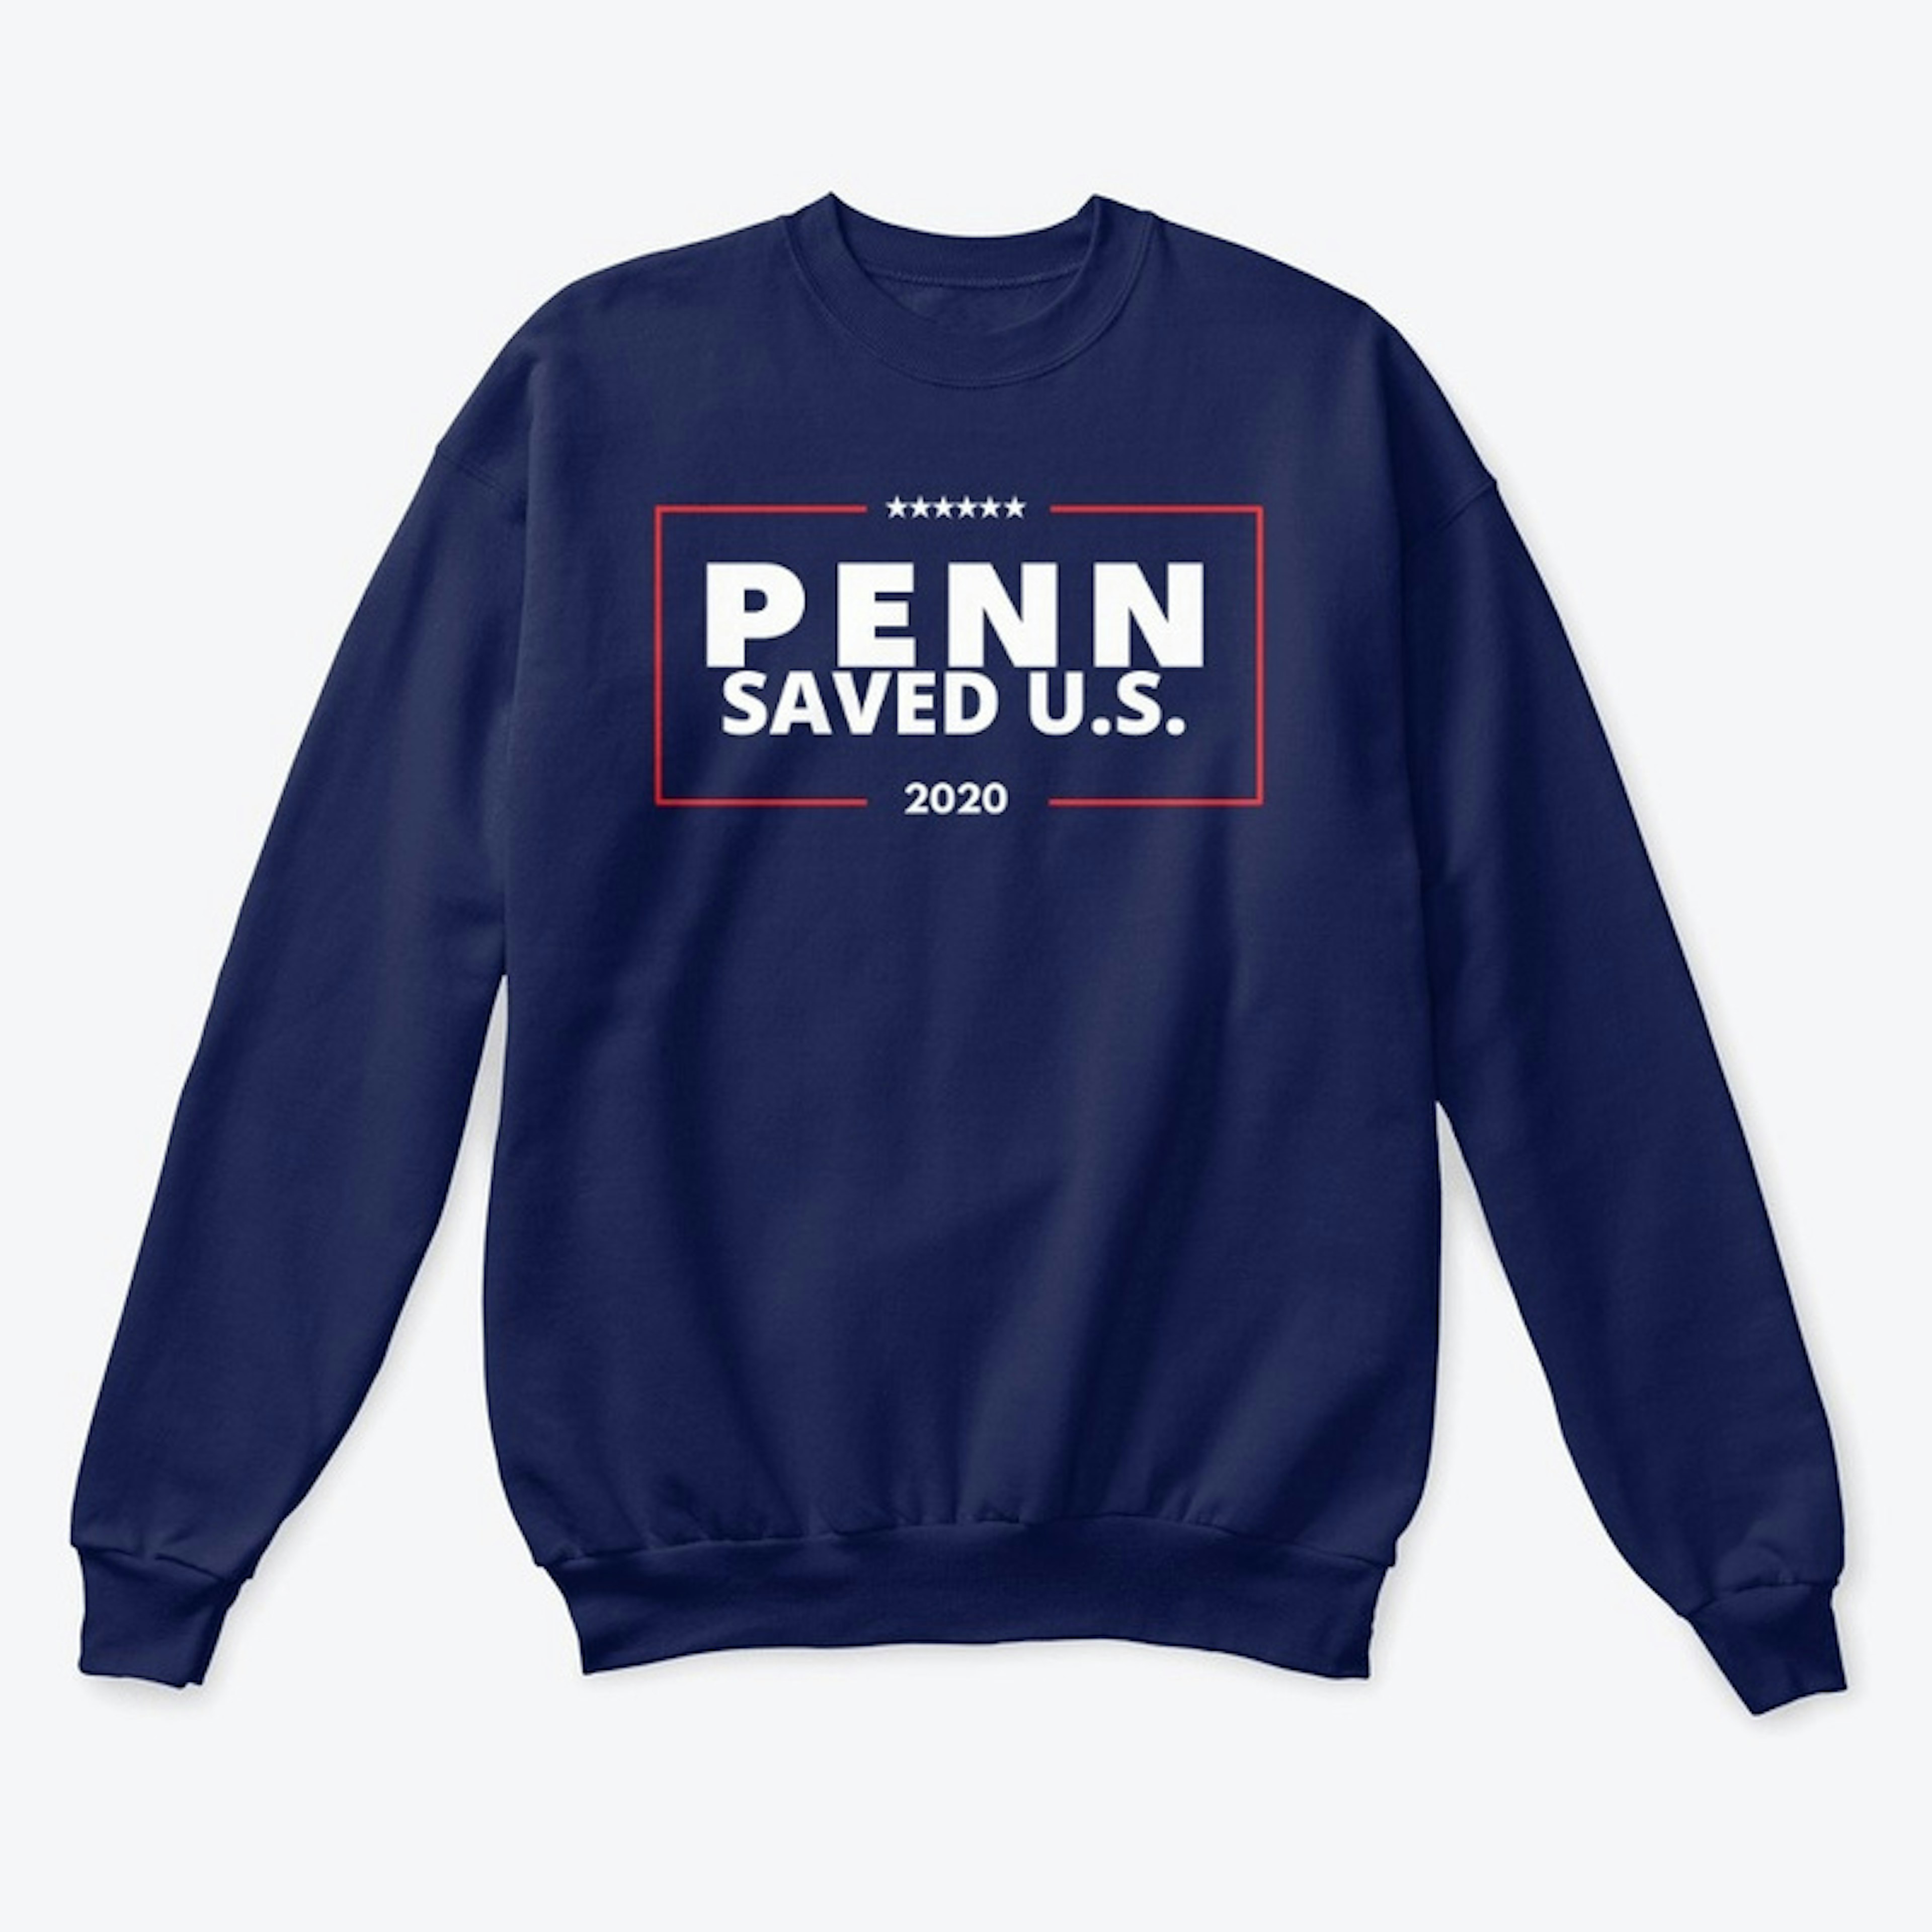 Penn Saved U.S. (Black/Blue)